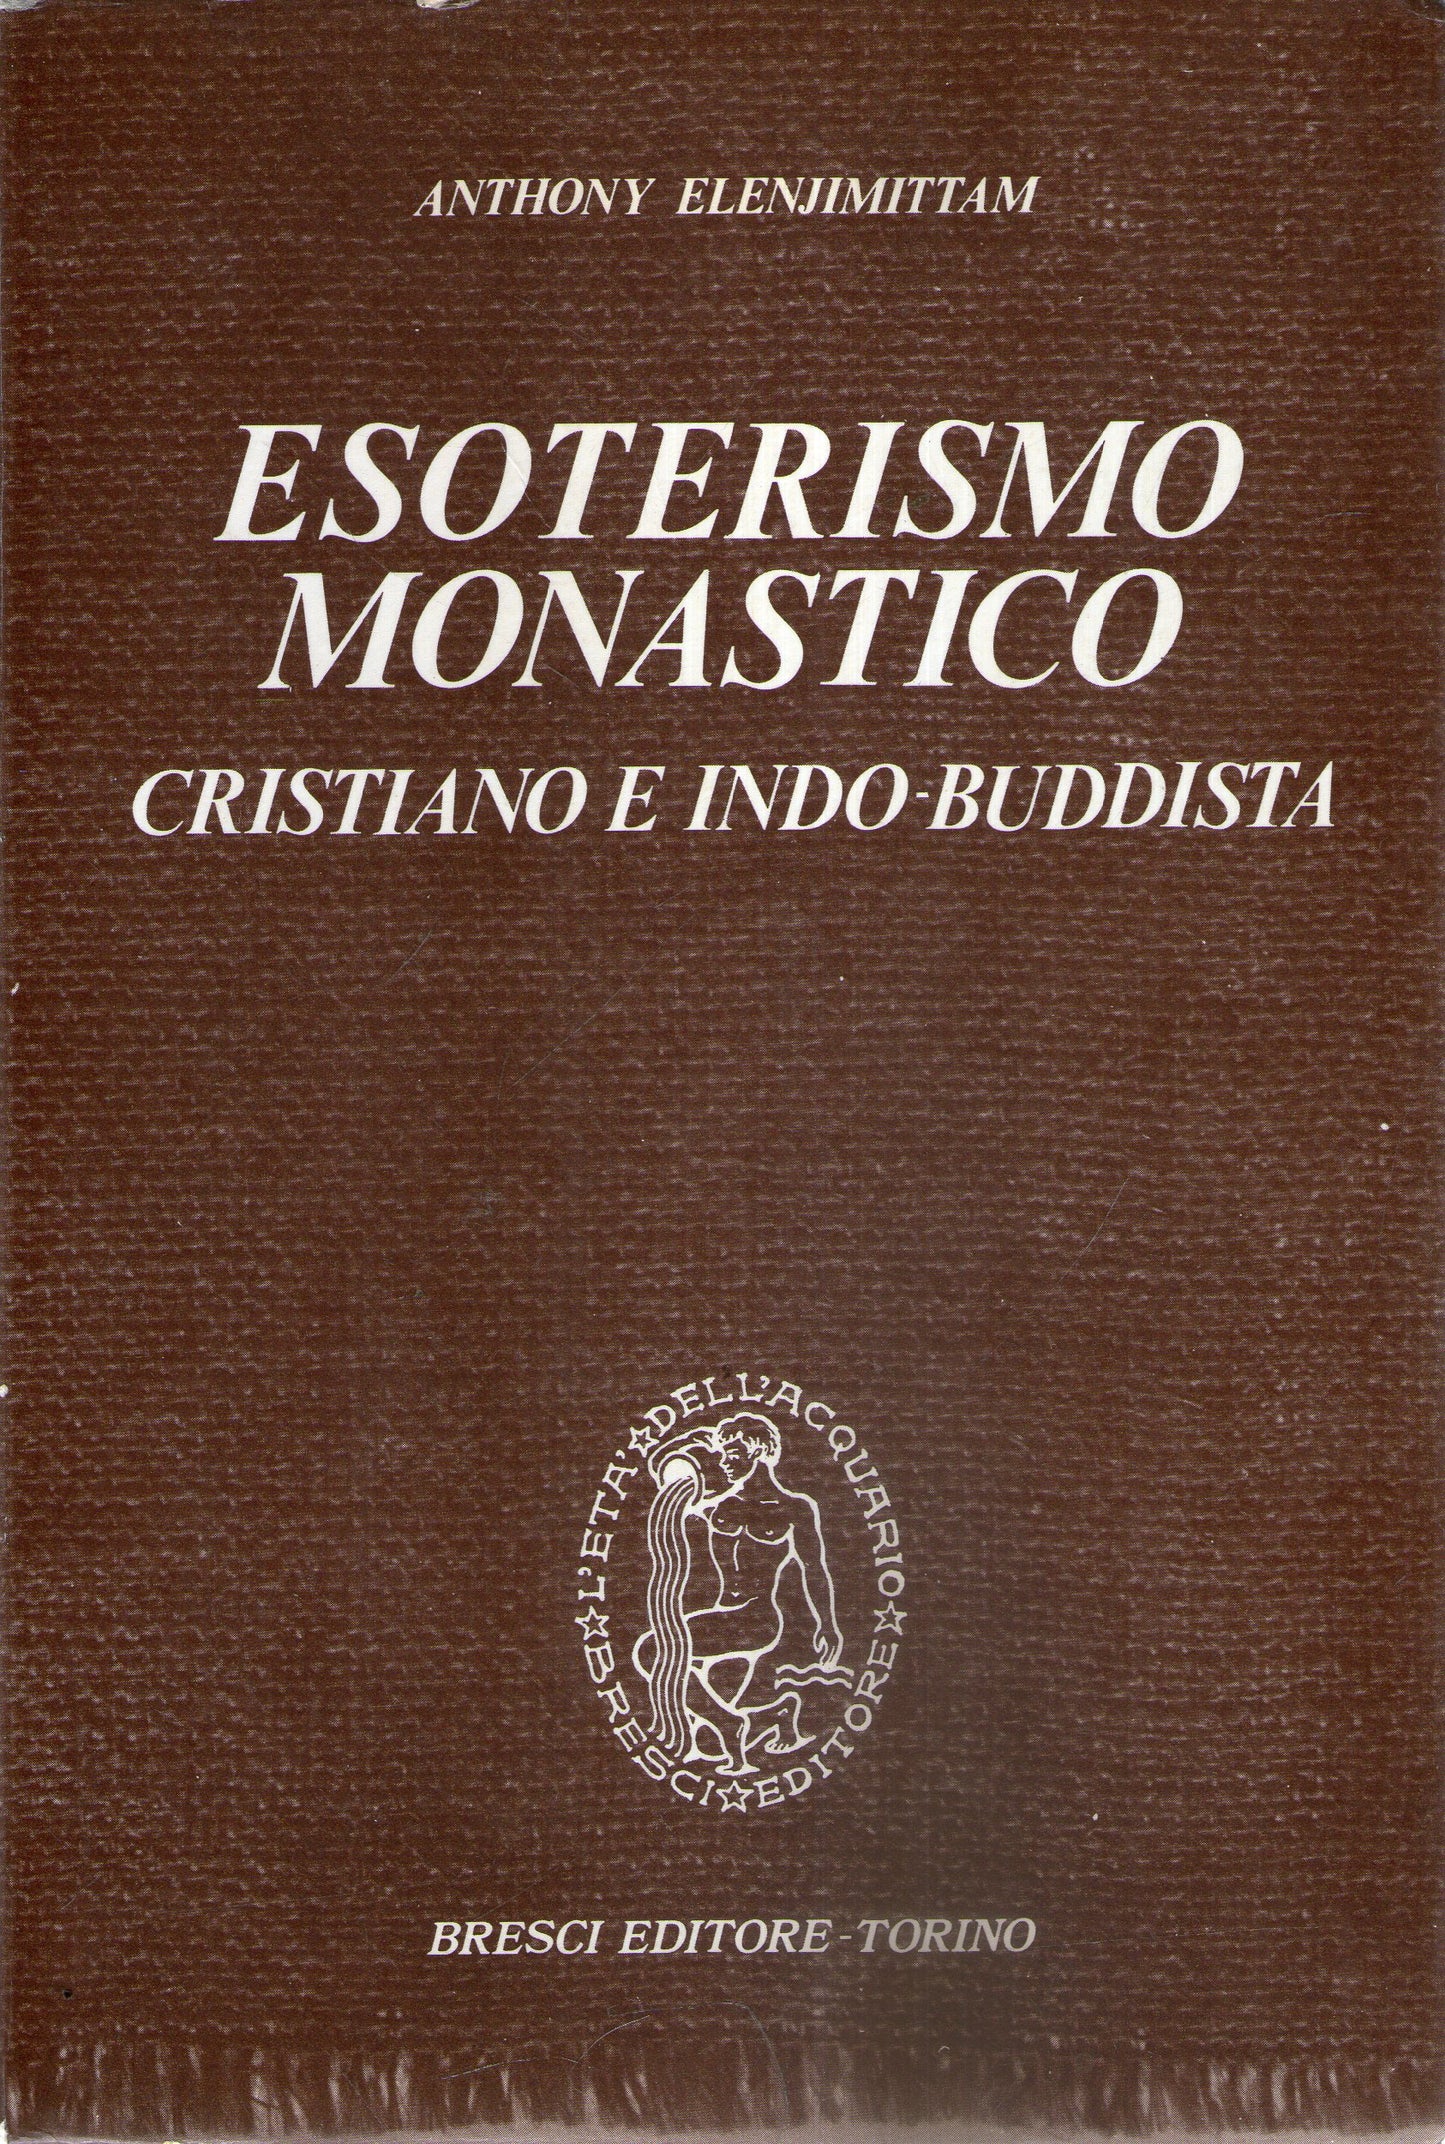 Esoterismo monastico cristiano indo-buddista (teologia religioni)